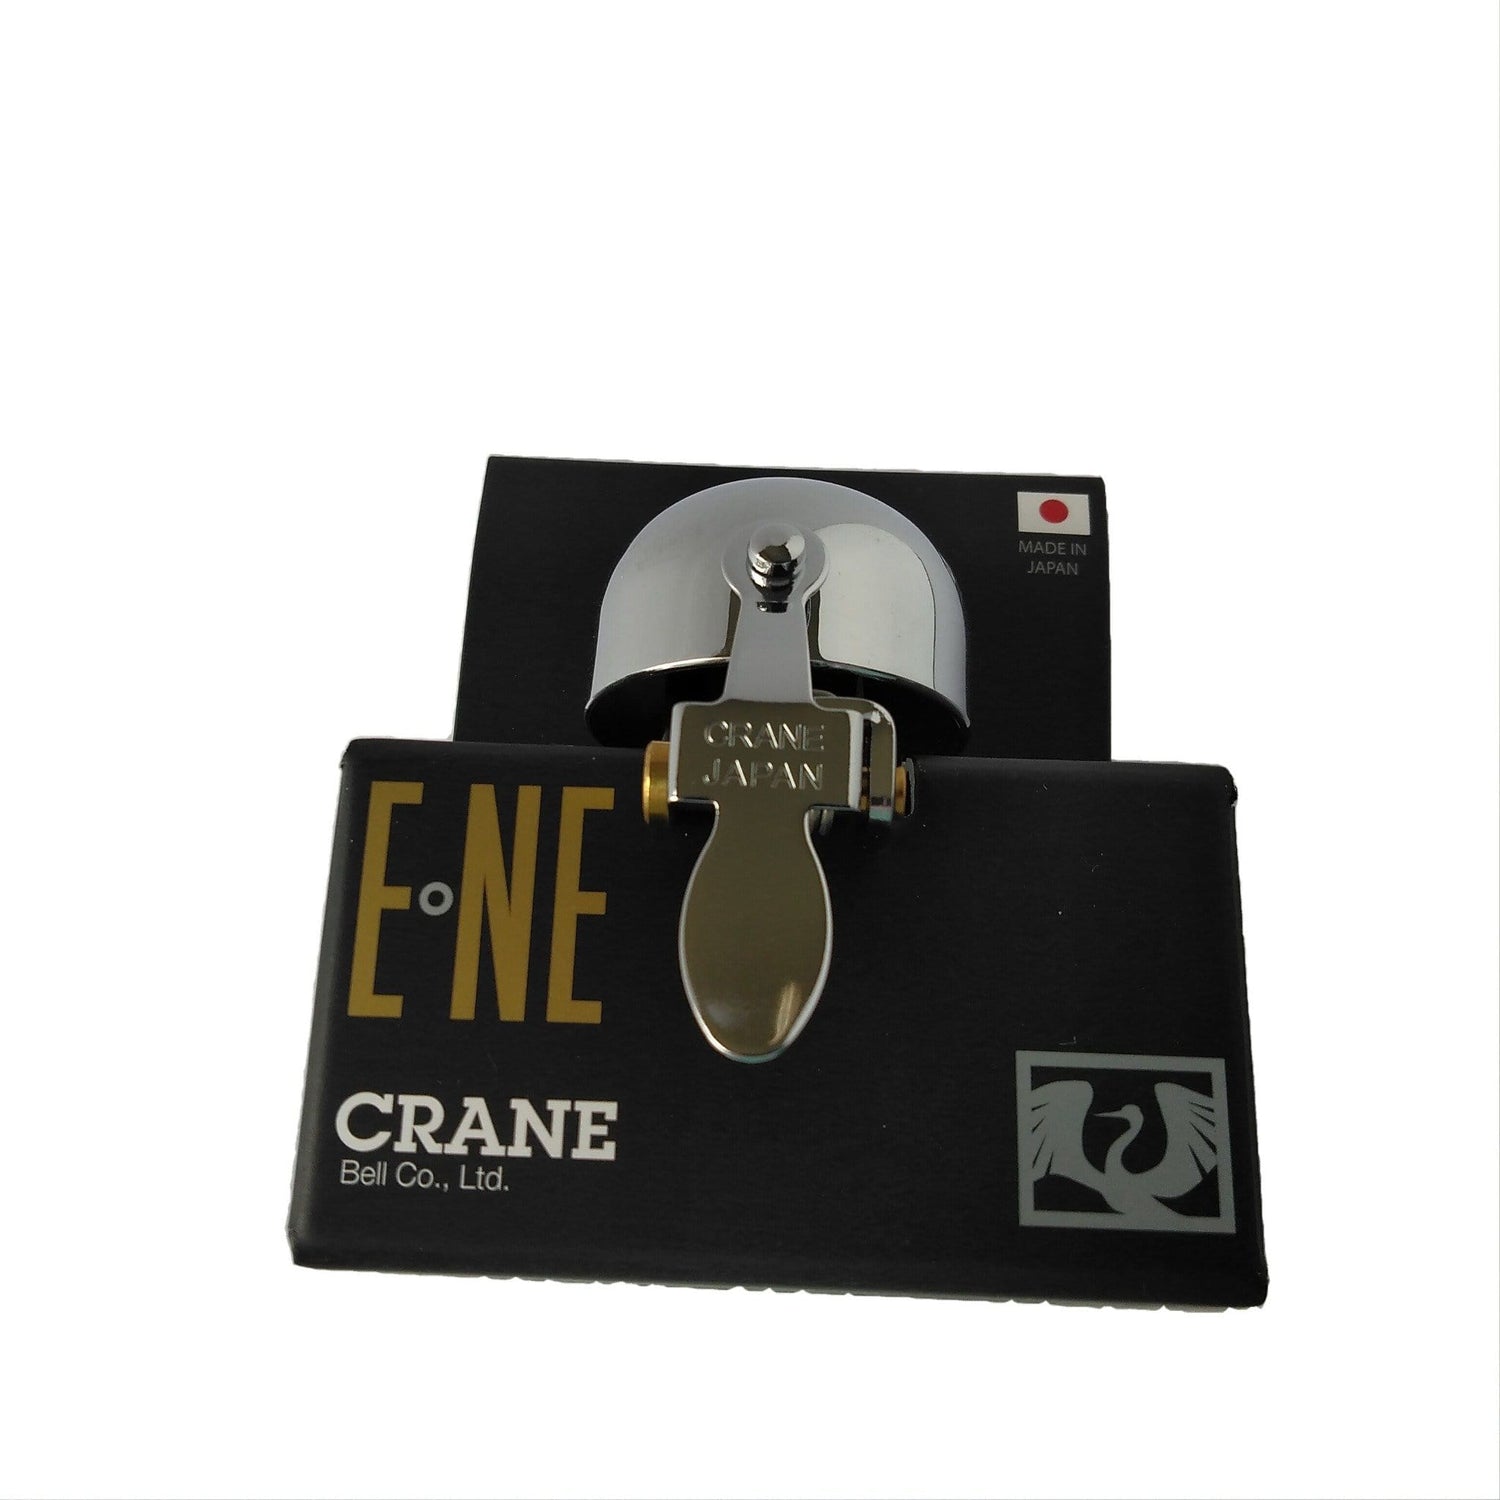 All Chrome E-NE Crane Bike Bell –